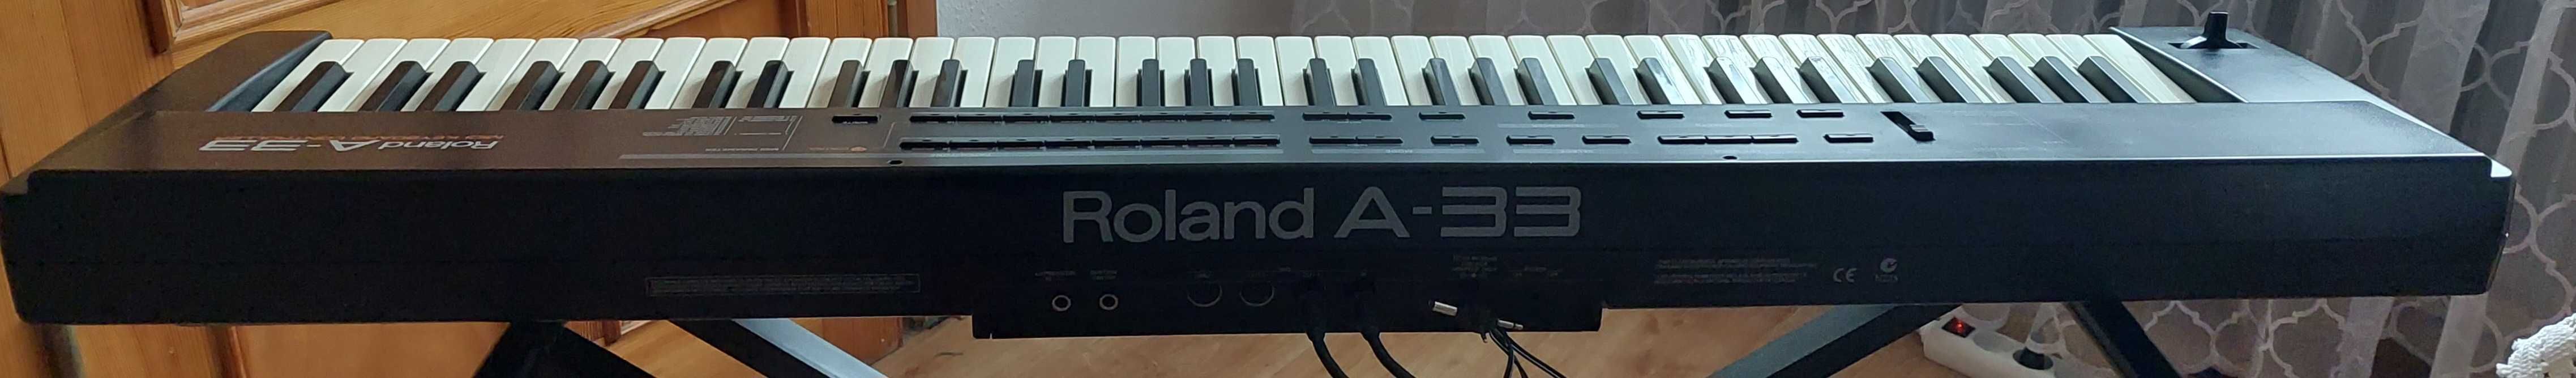 Roland A-33 klawiatura sterująca